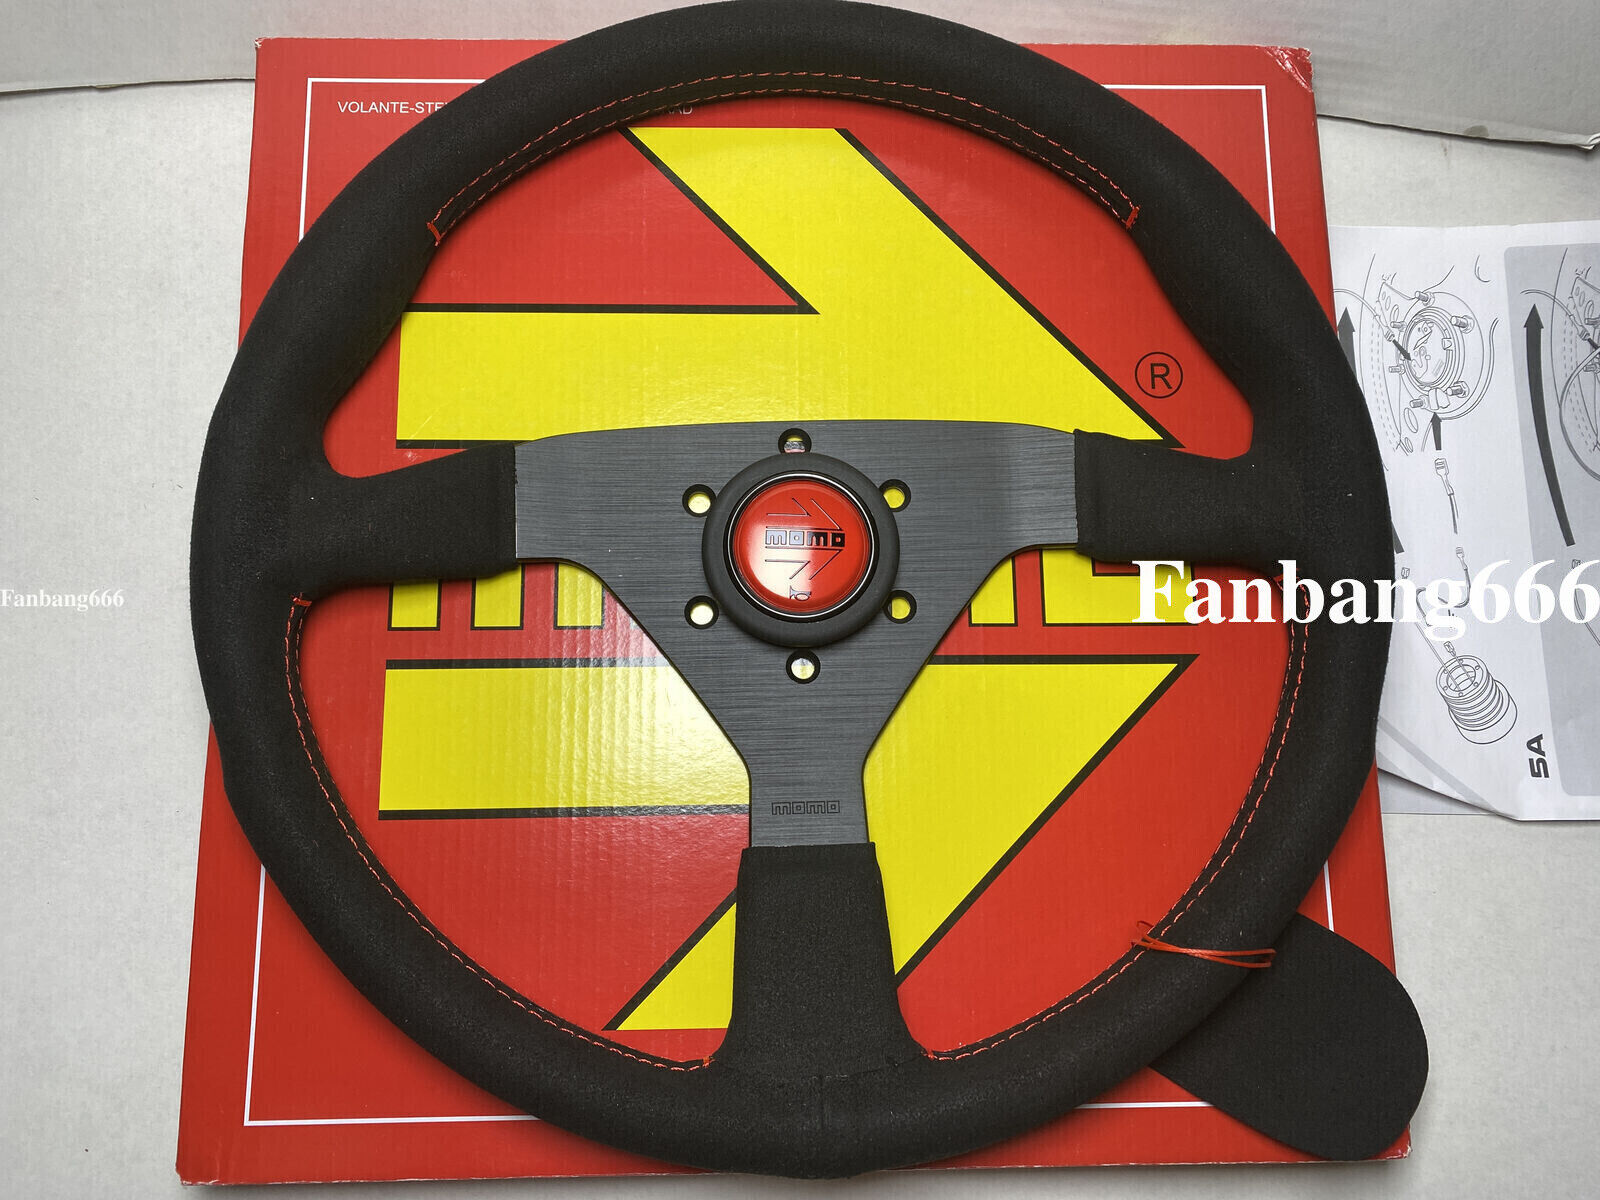 MOMO MonteCarlo 350mm 14' Suede Thickened Spoke Red Stitch Sport Steering Wheel